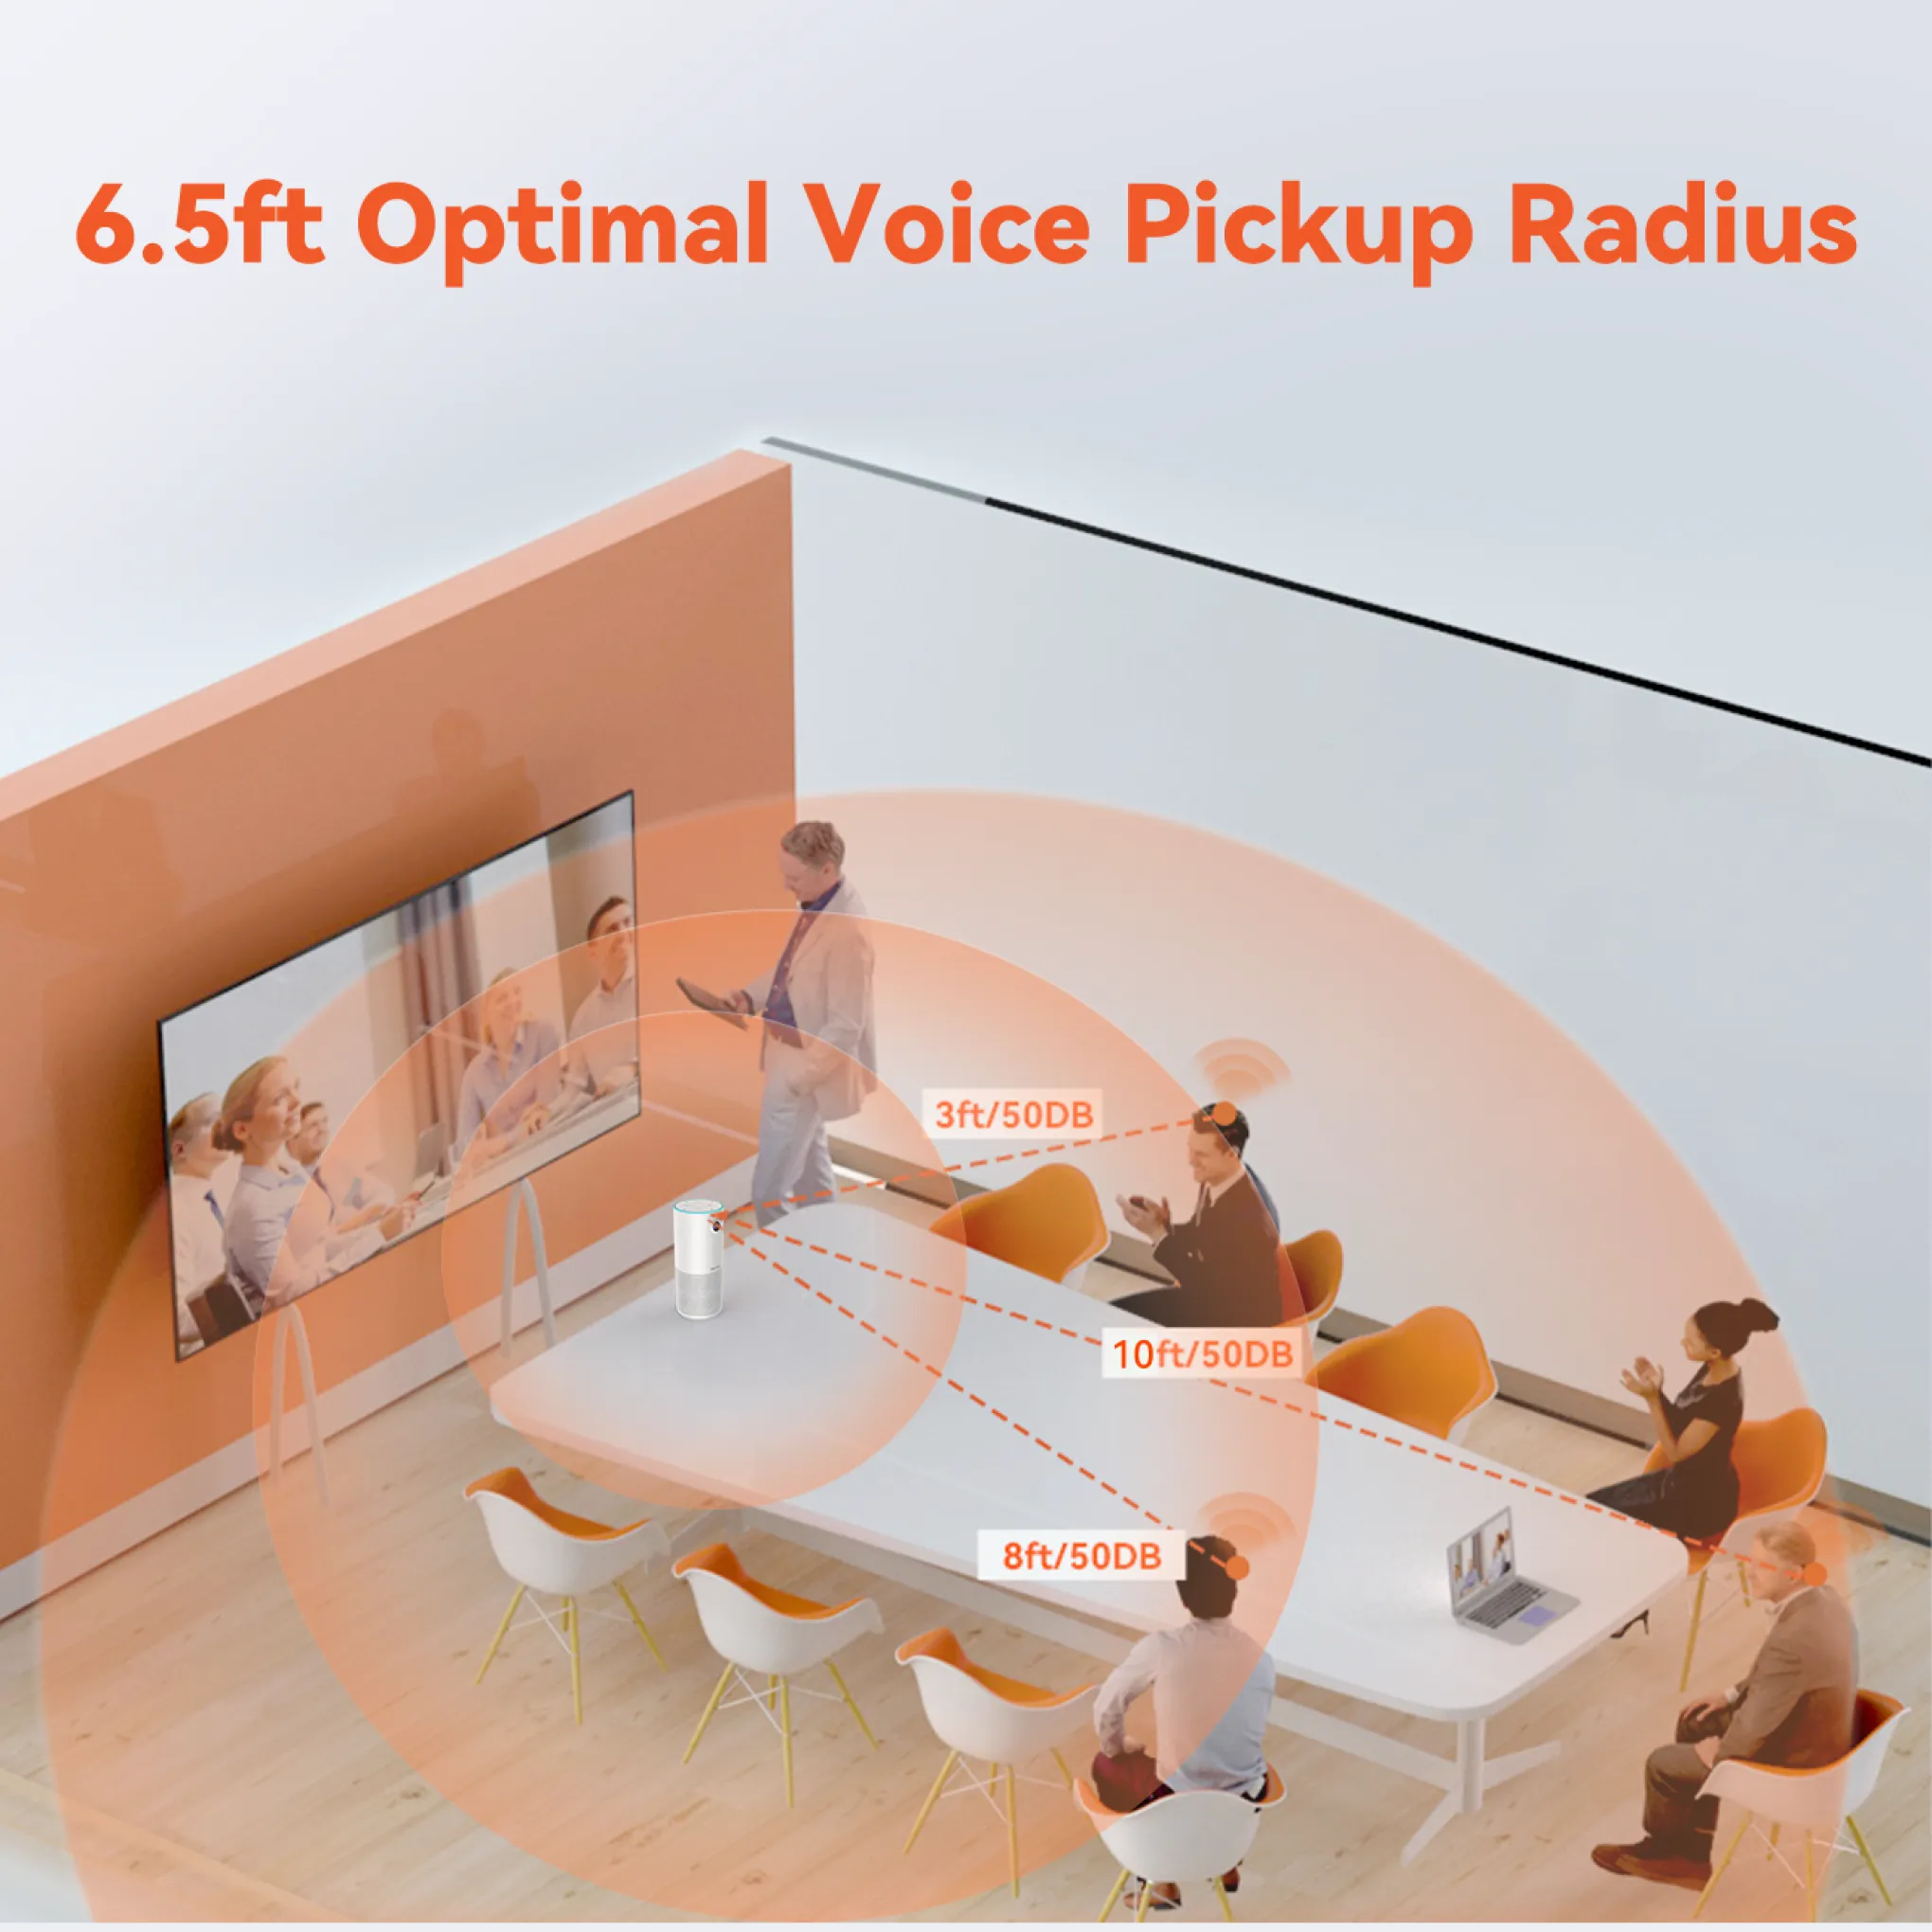 optimal voice pickup radius